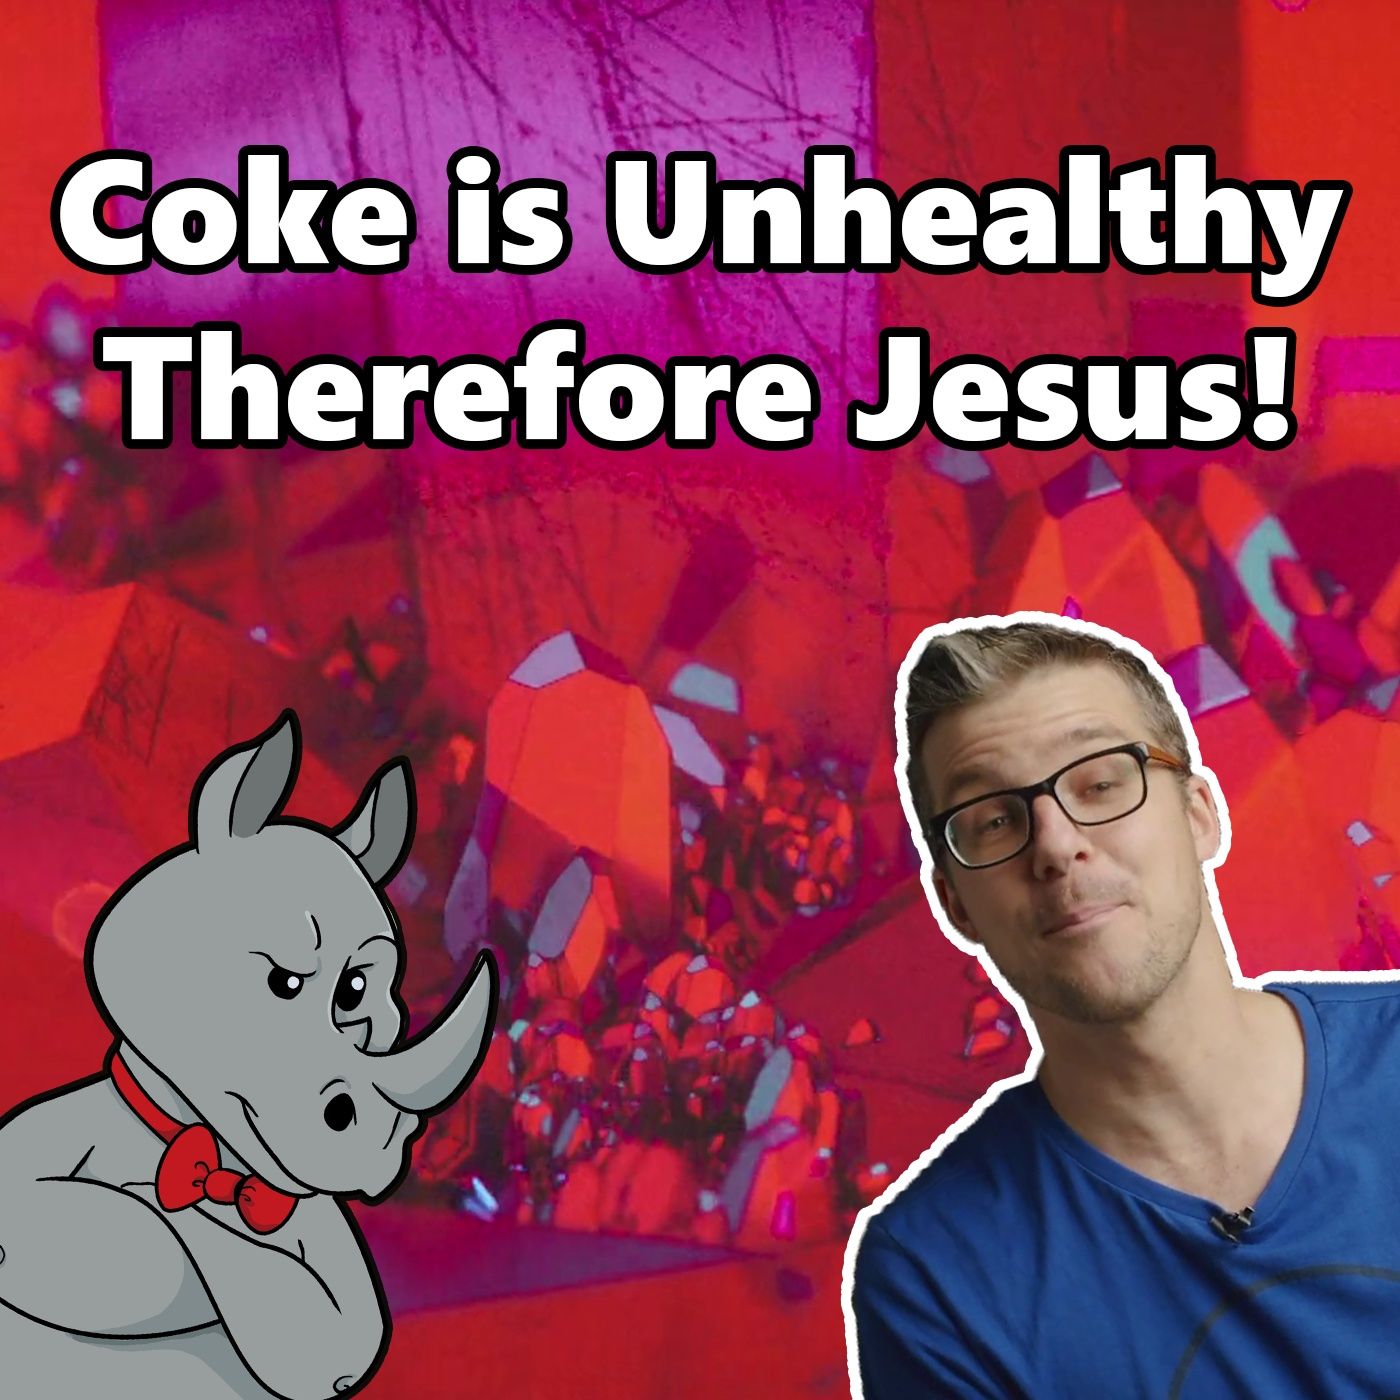 If Coca Cola is Unhealthy, Then Jesus' Resurrection is True!